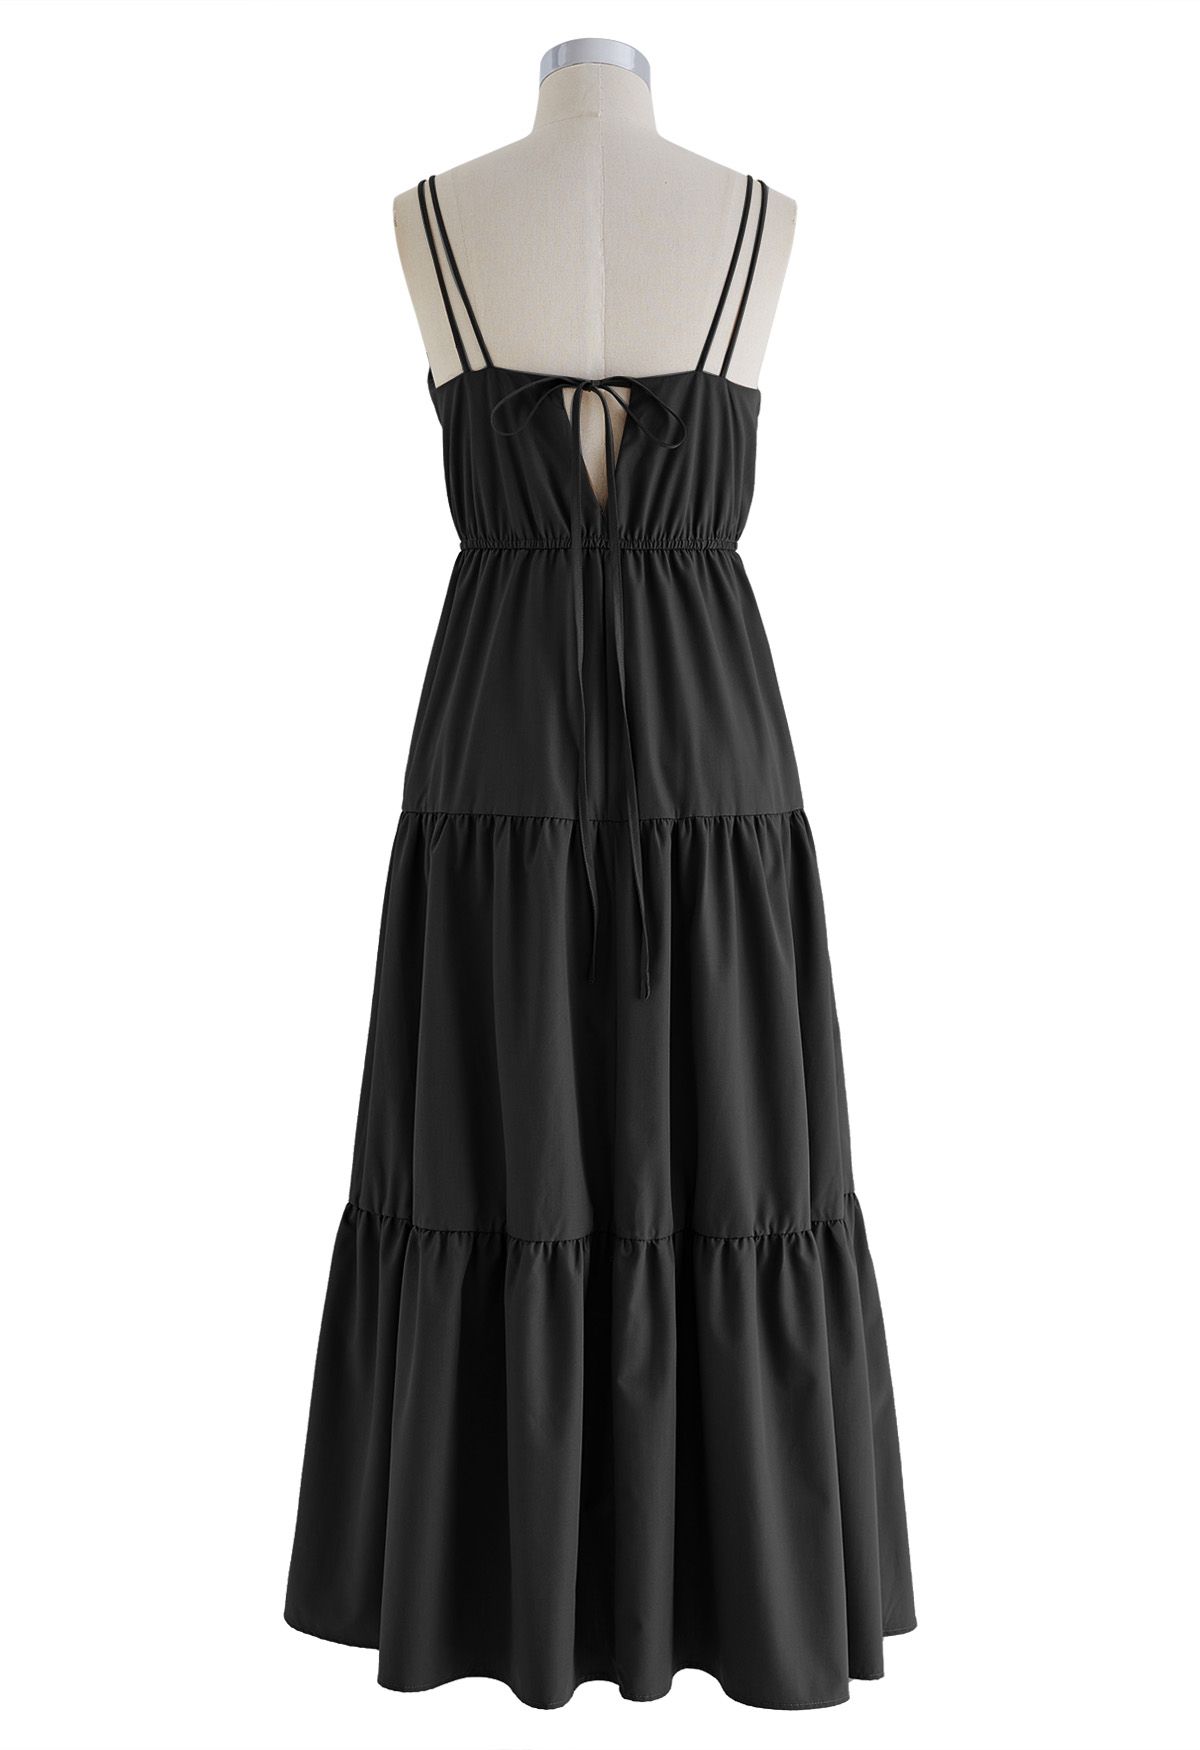 Double Straps Tie-Back Cami Dress in Black - Retro, Indie and Unique ...